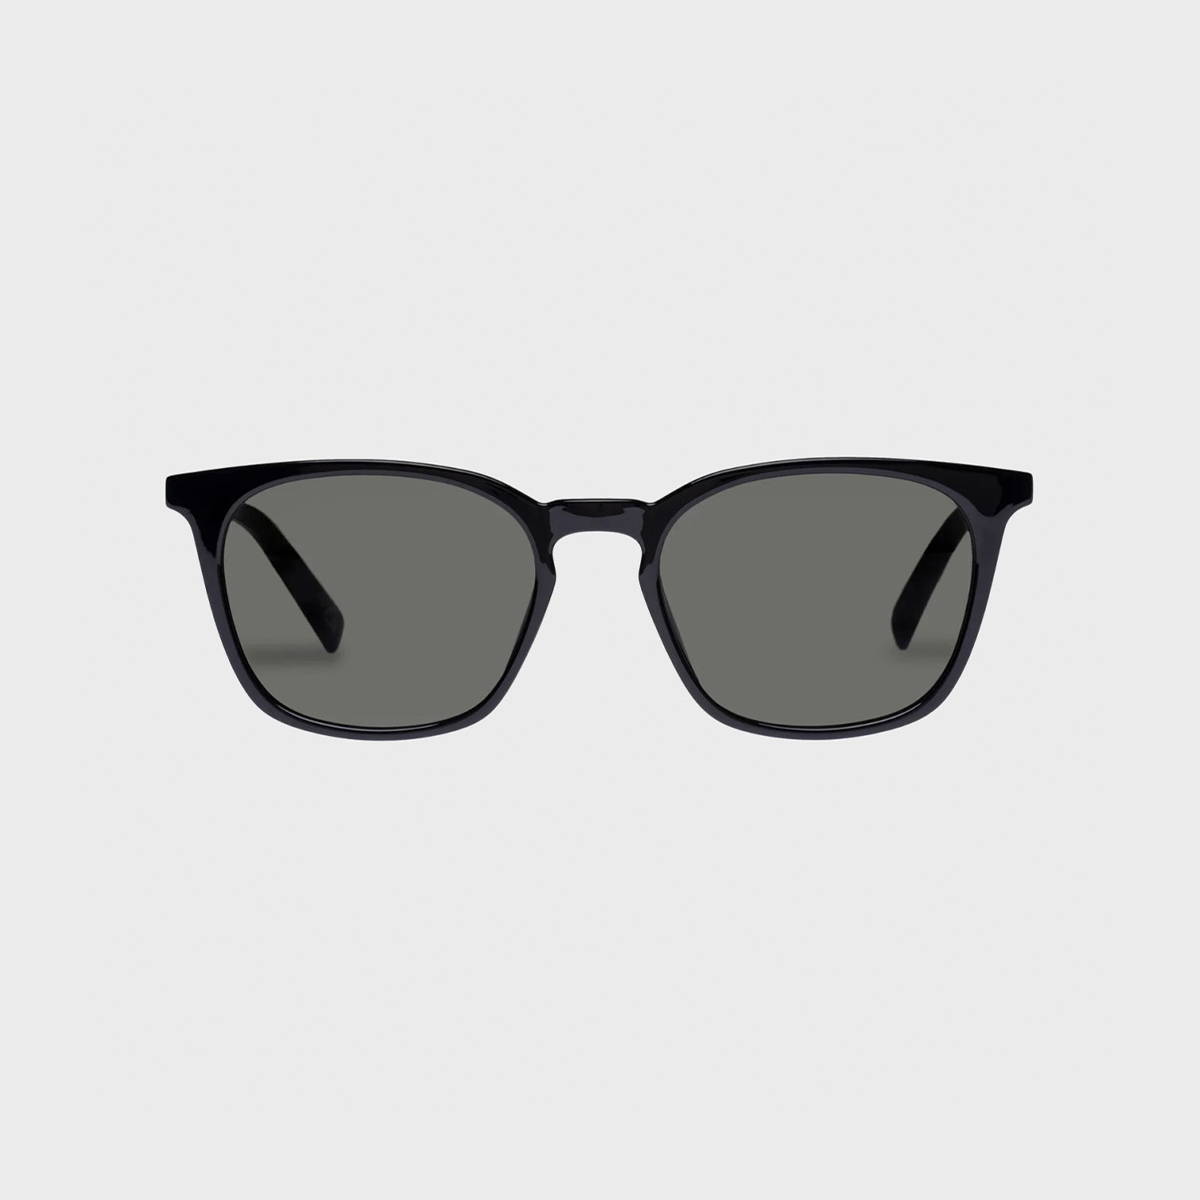 Shop Men's Aviator Sunglasses | Le Specs